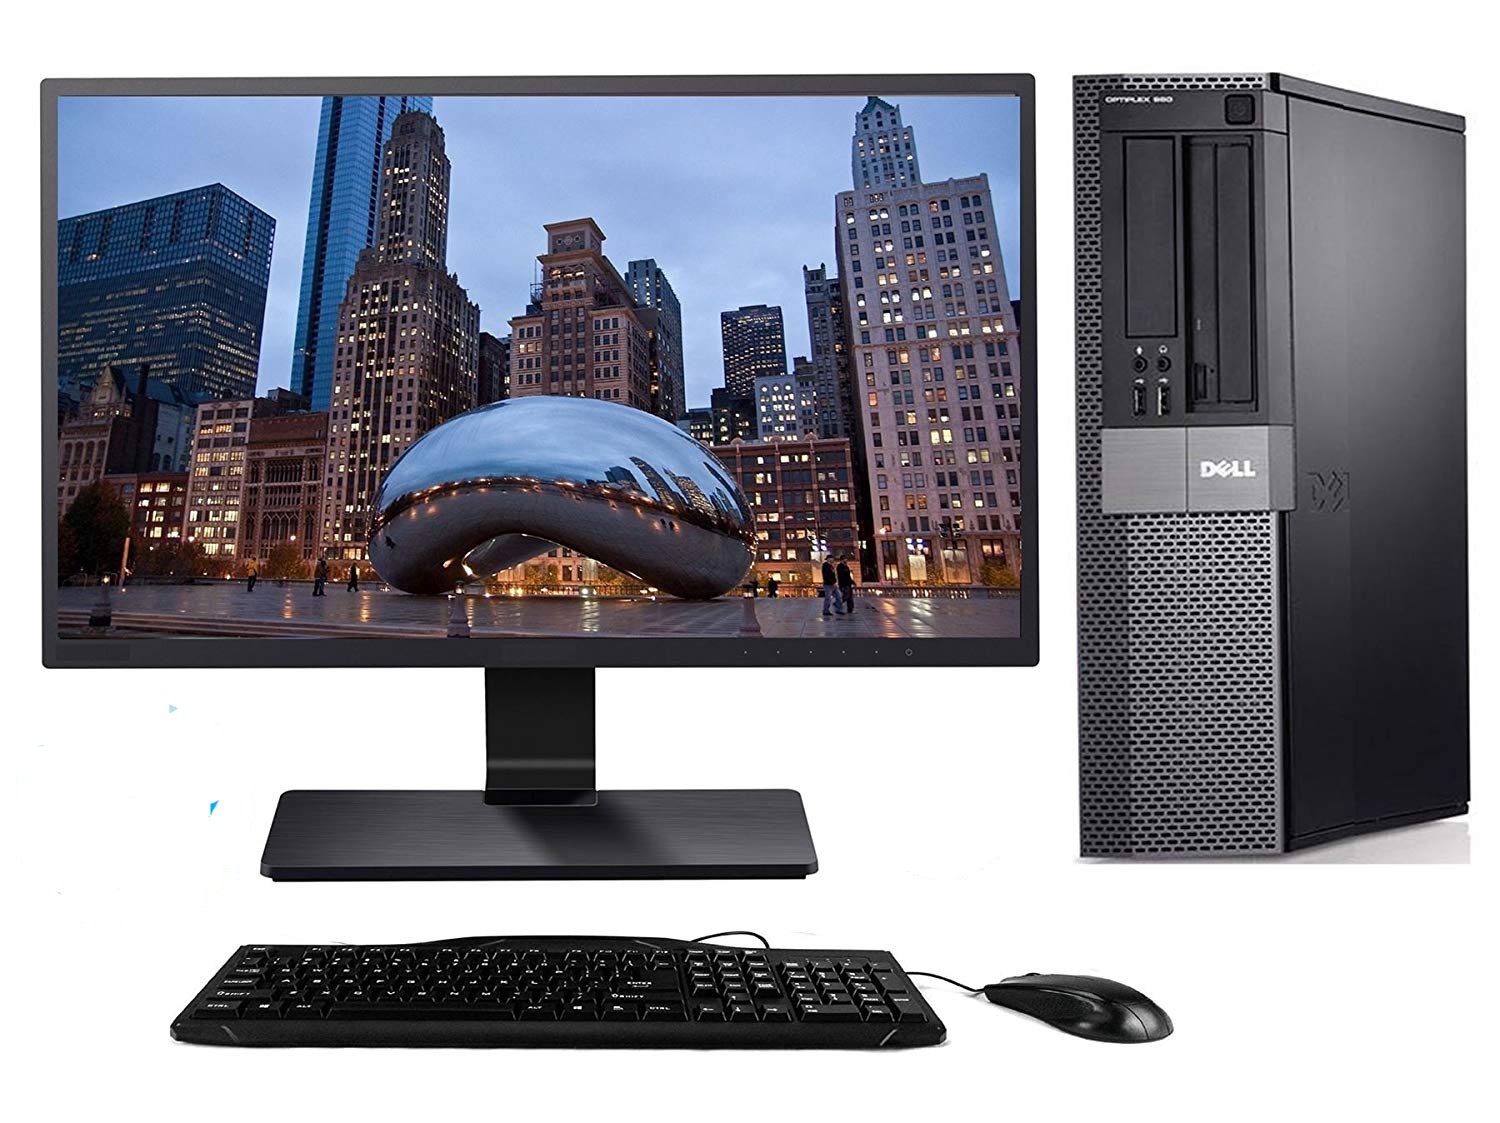 Dell Optiplex 990 Desktop + 22 Inch Dell Monitor~Windows 10 64 Bit ~ Keyboard~Mouse~WiFi Refurbished - Atlas Computers & Electronics 